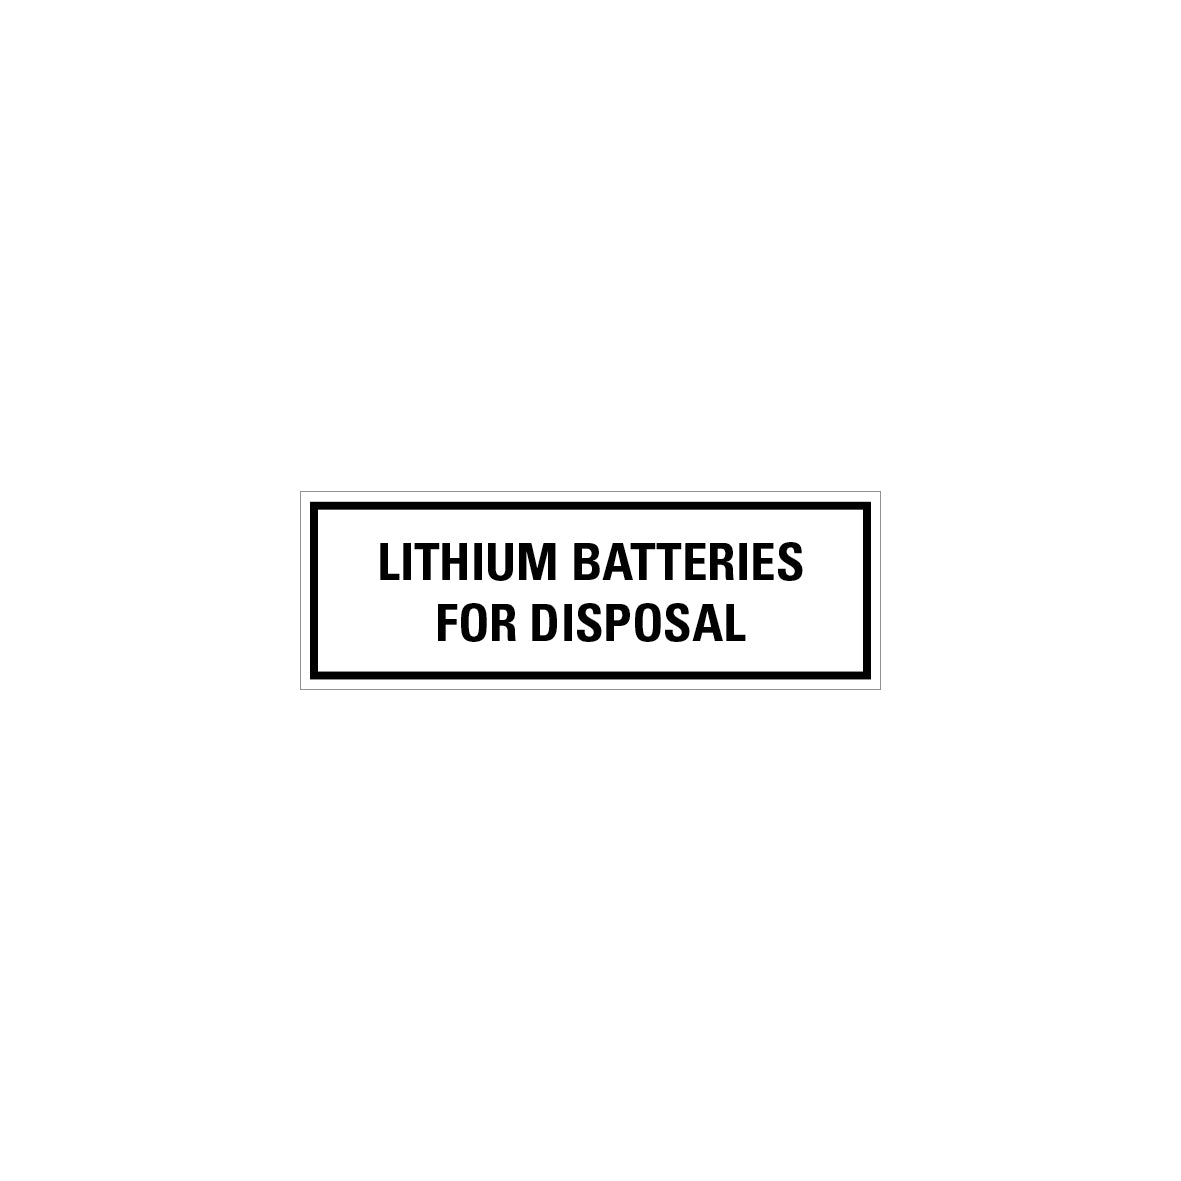 Gefahrstoff Batterien, Lithium Batteries for disposal, 5.0415, 150 x 50 mm, Ro 500 Stk.